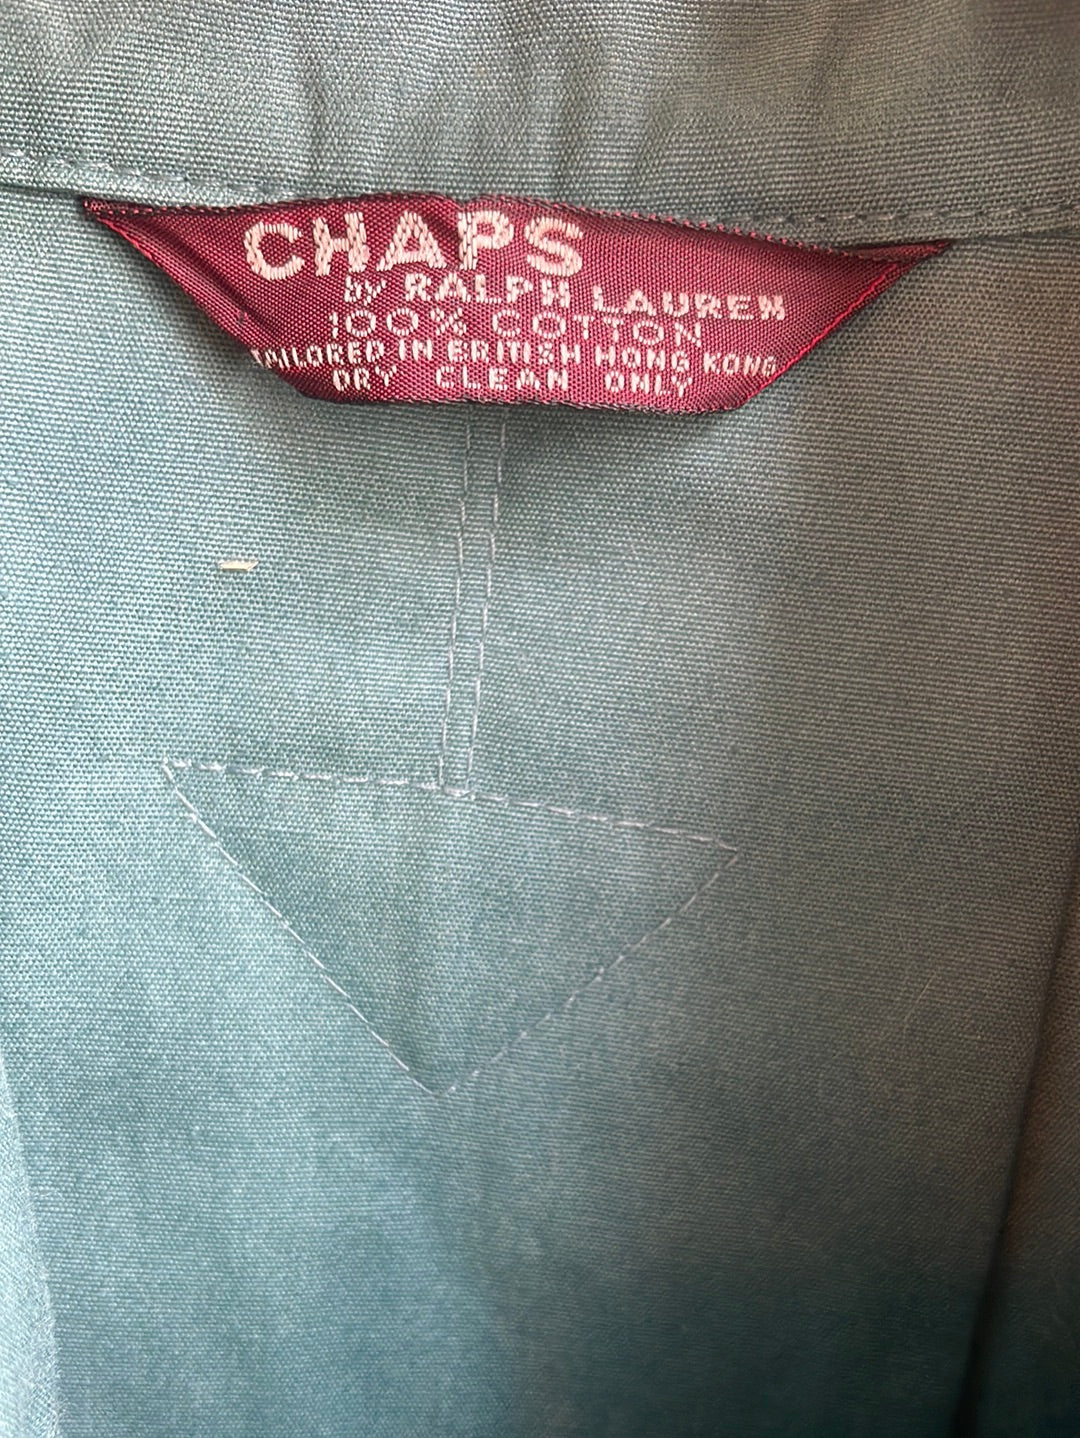 Teal Chaps Jacket